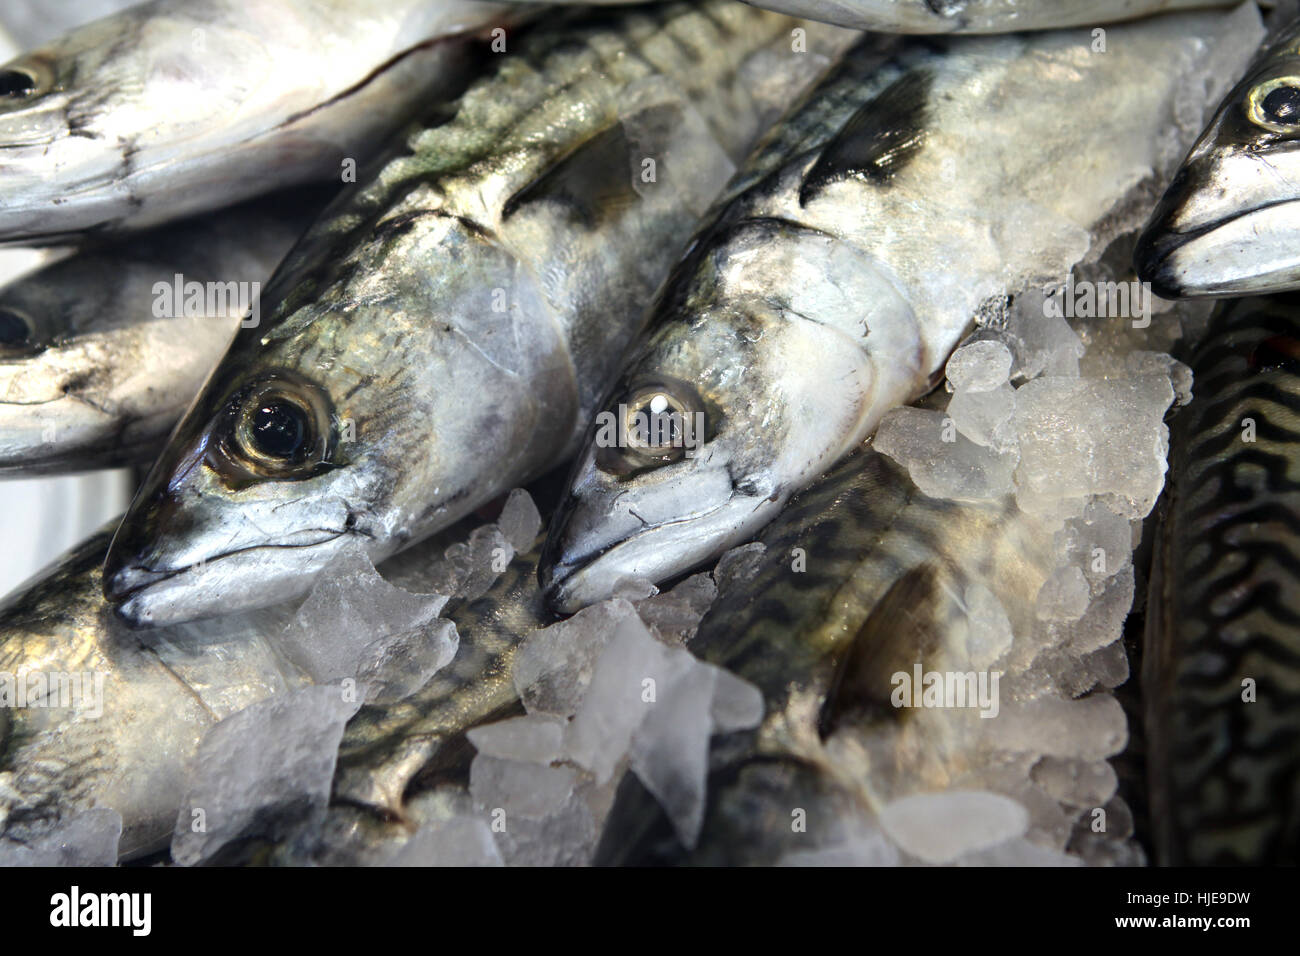 fish, fish-market, weekly market, marketplace, flea market, mackerel, food, Stock Photo